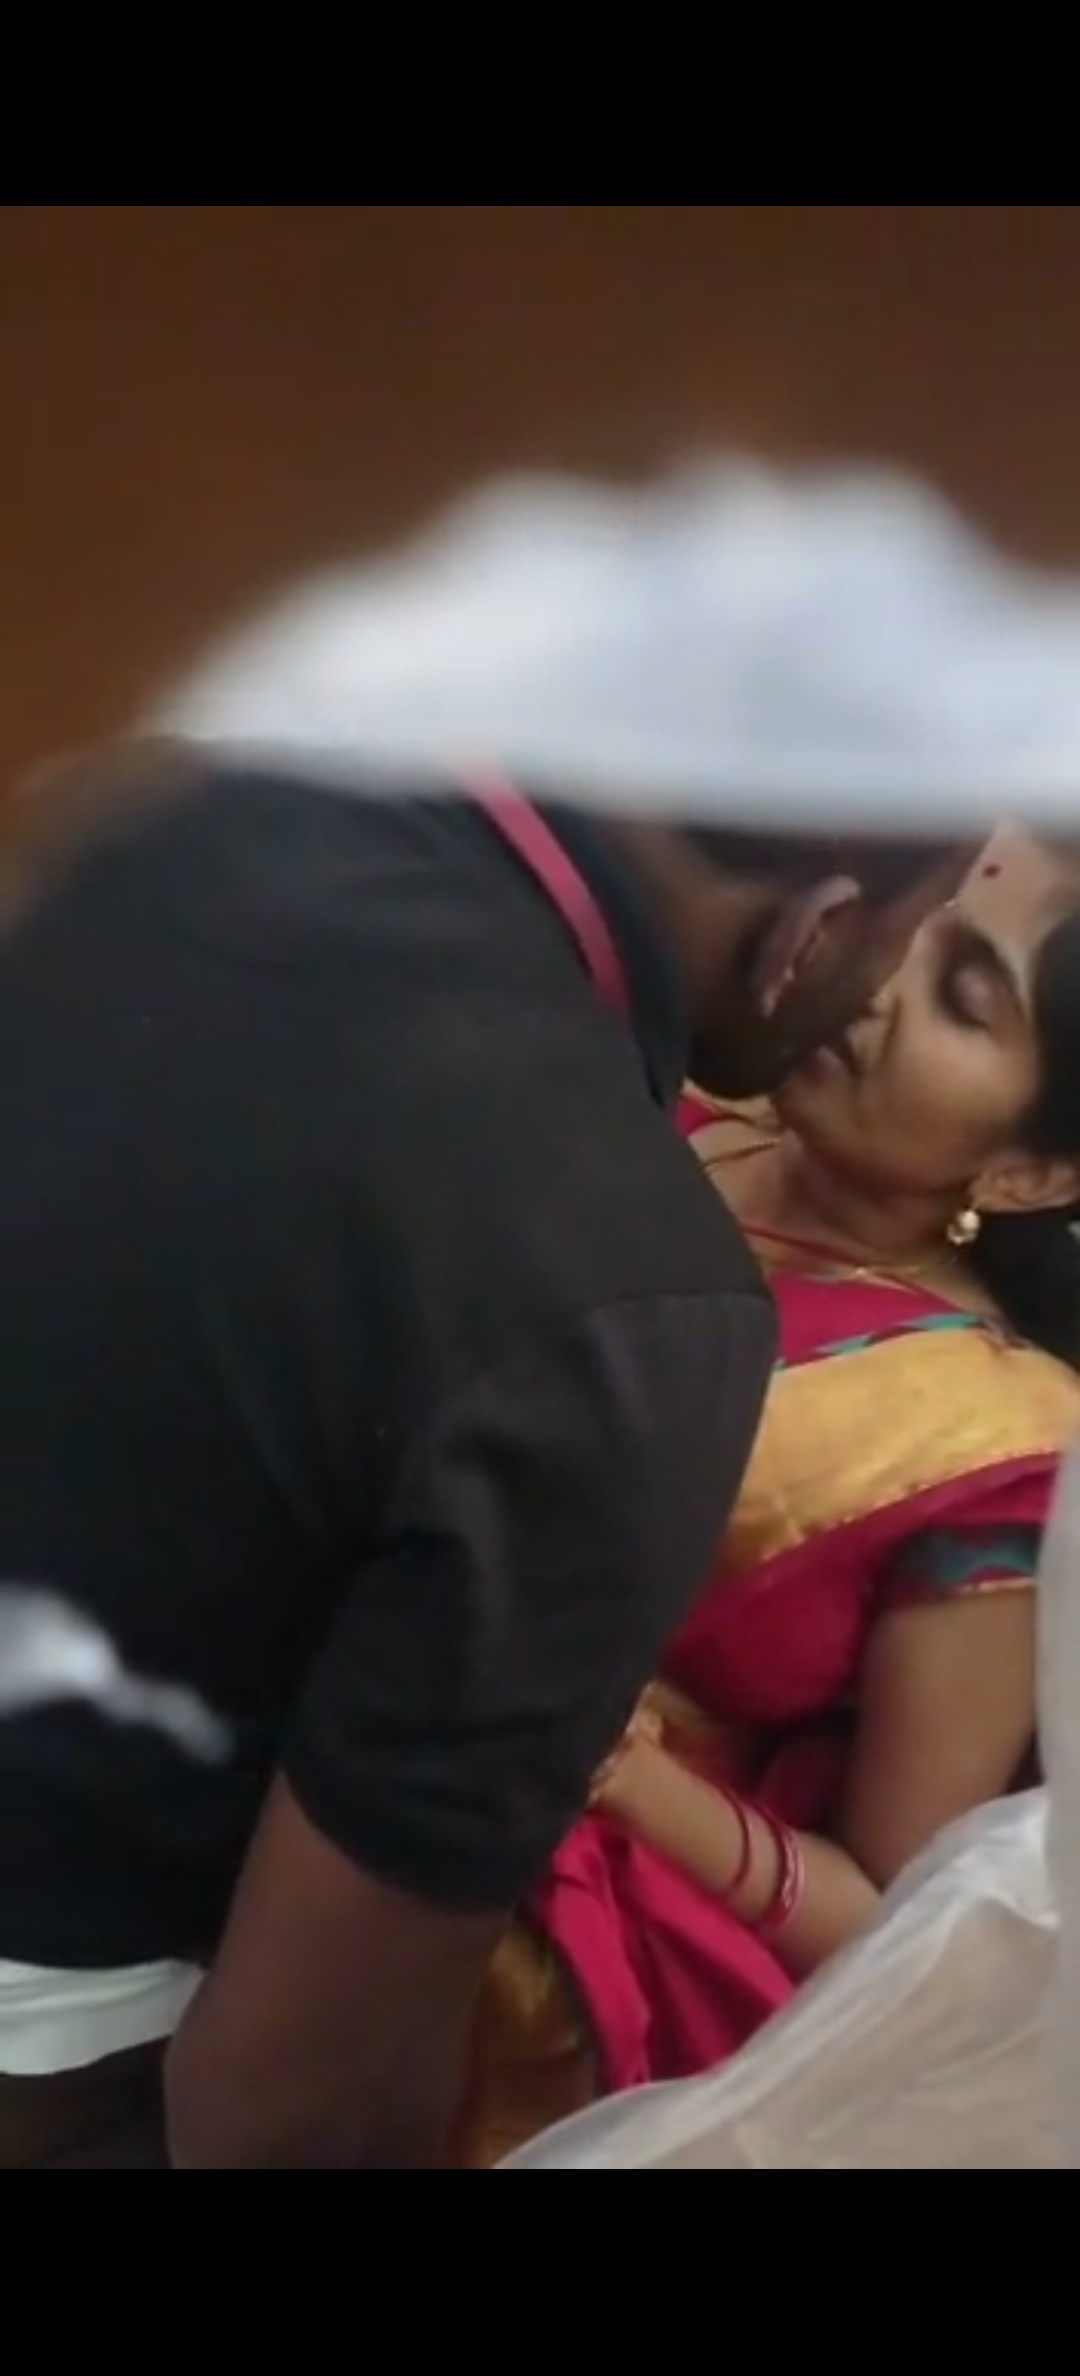 Tamil Lovers Store Room Hidden Full Video pic